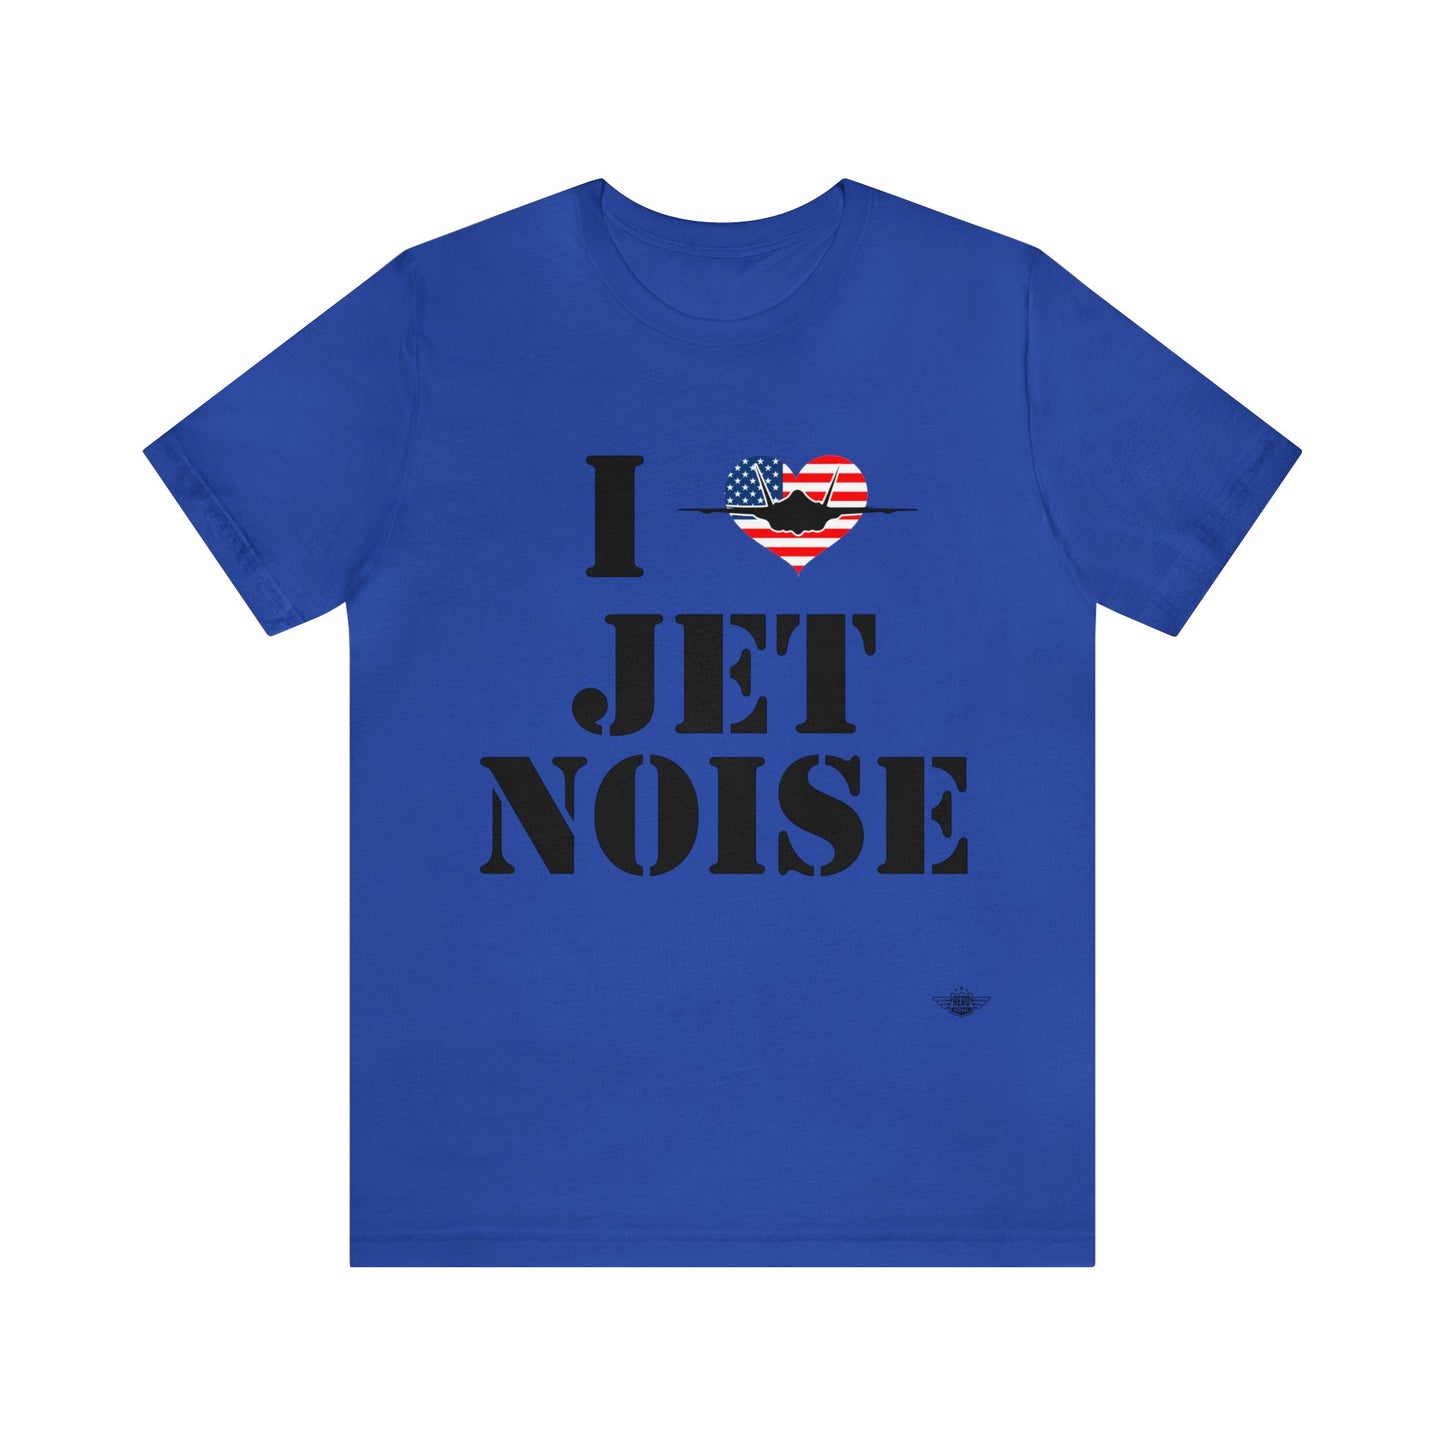 I Heart Jet Noise Unisex Jersey Short Sleeve Tee